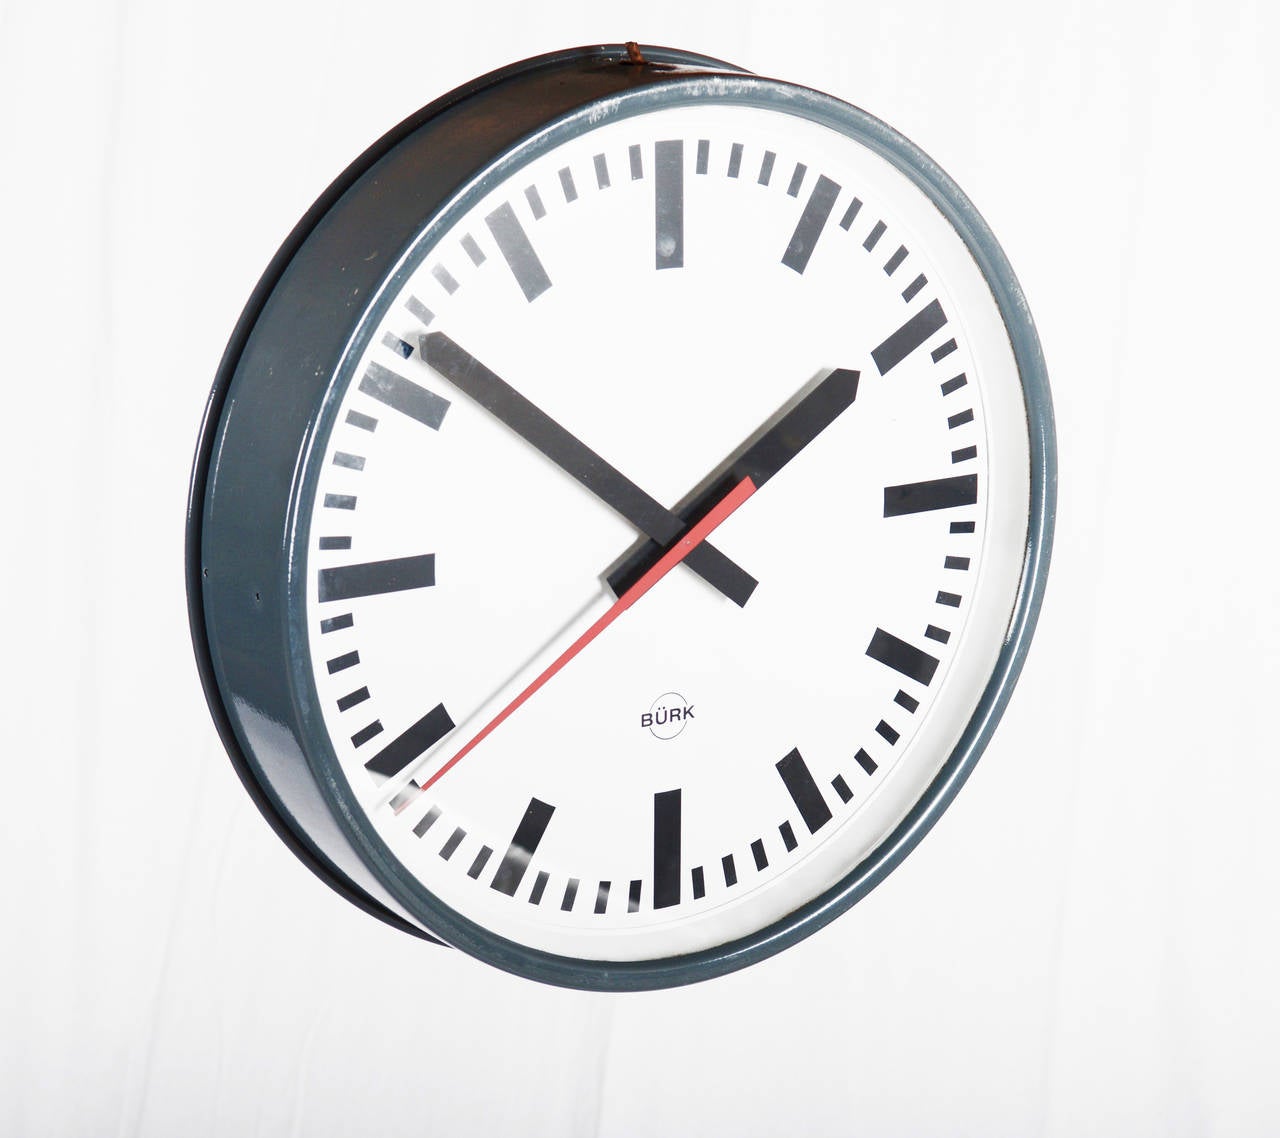 Mid-20th Century Large German Industrial Clock, Labeled Bürk